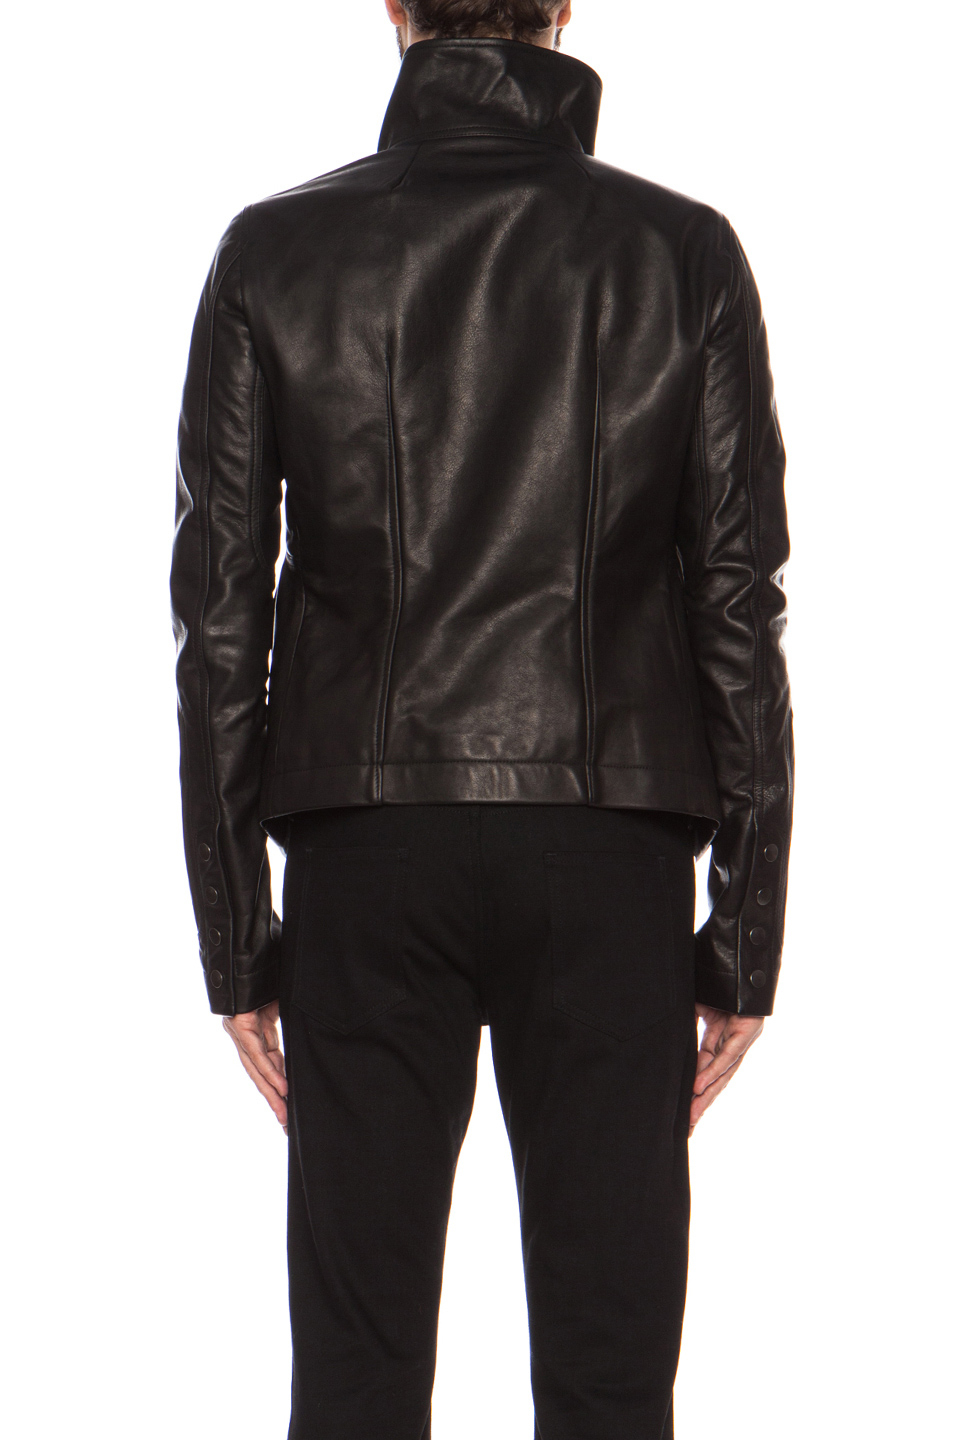 Rick Owens Bauhaus Leather Jacket in Black - Lyst